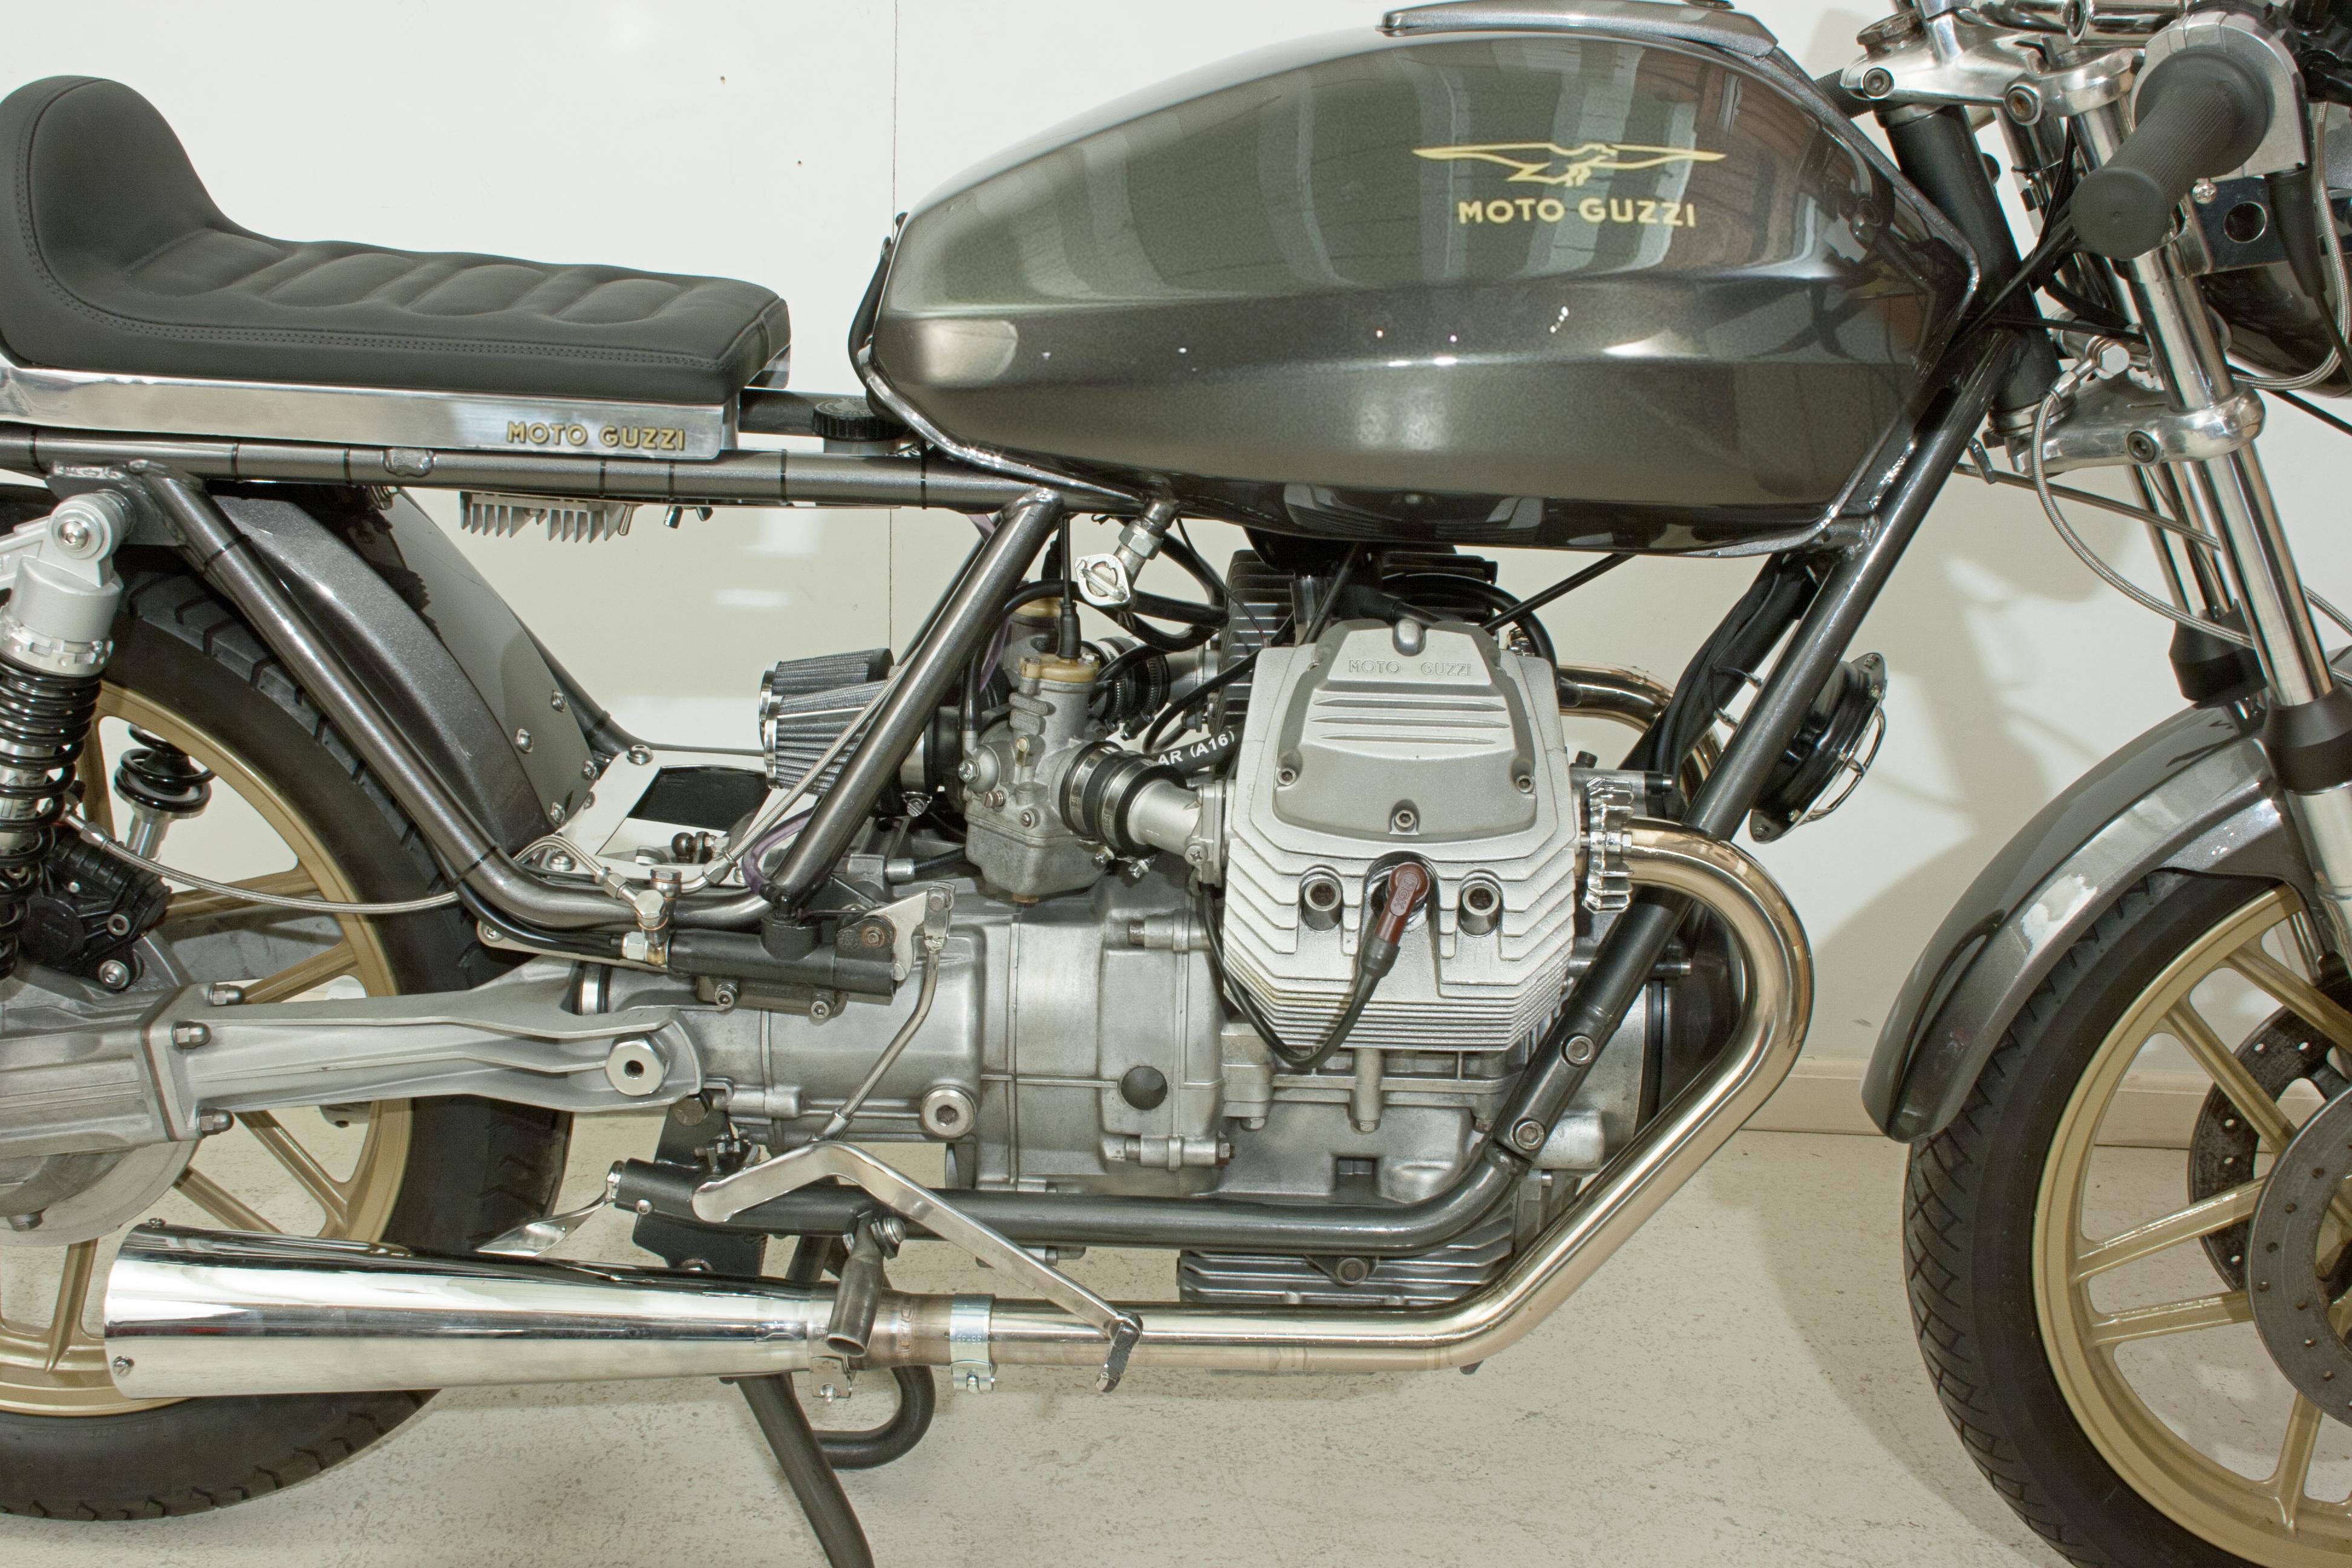 1982 Moto Guzzi Cafe Racer V50 Italian Motorcycle For Sale 1